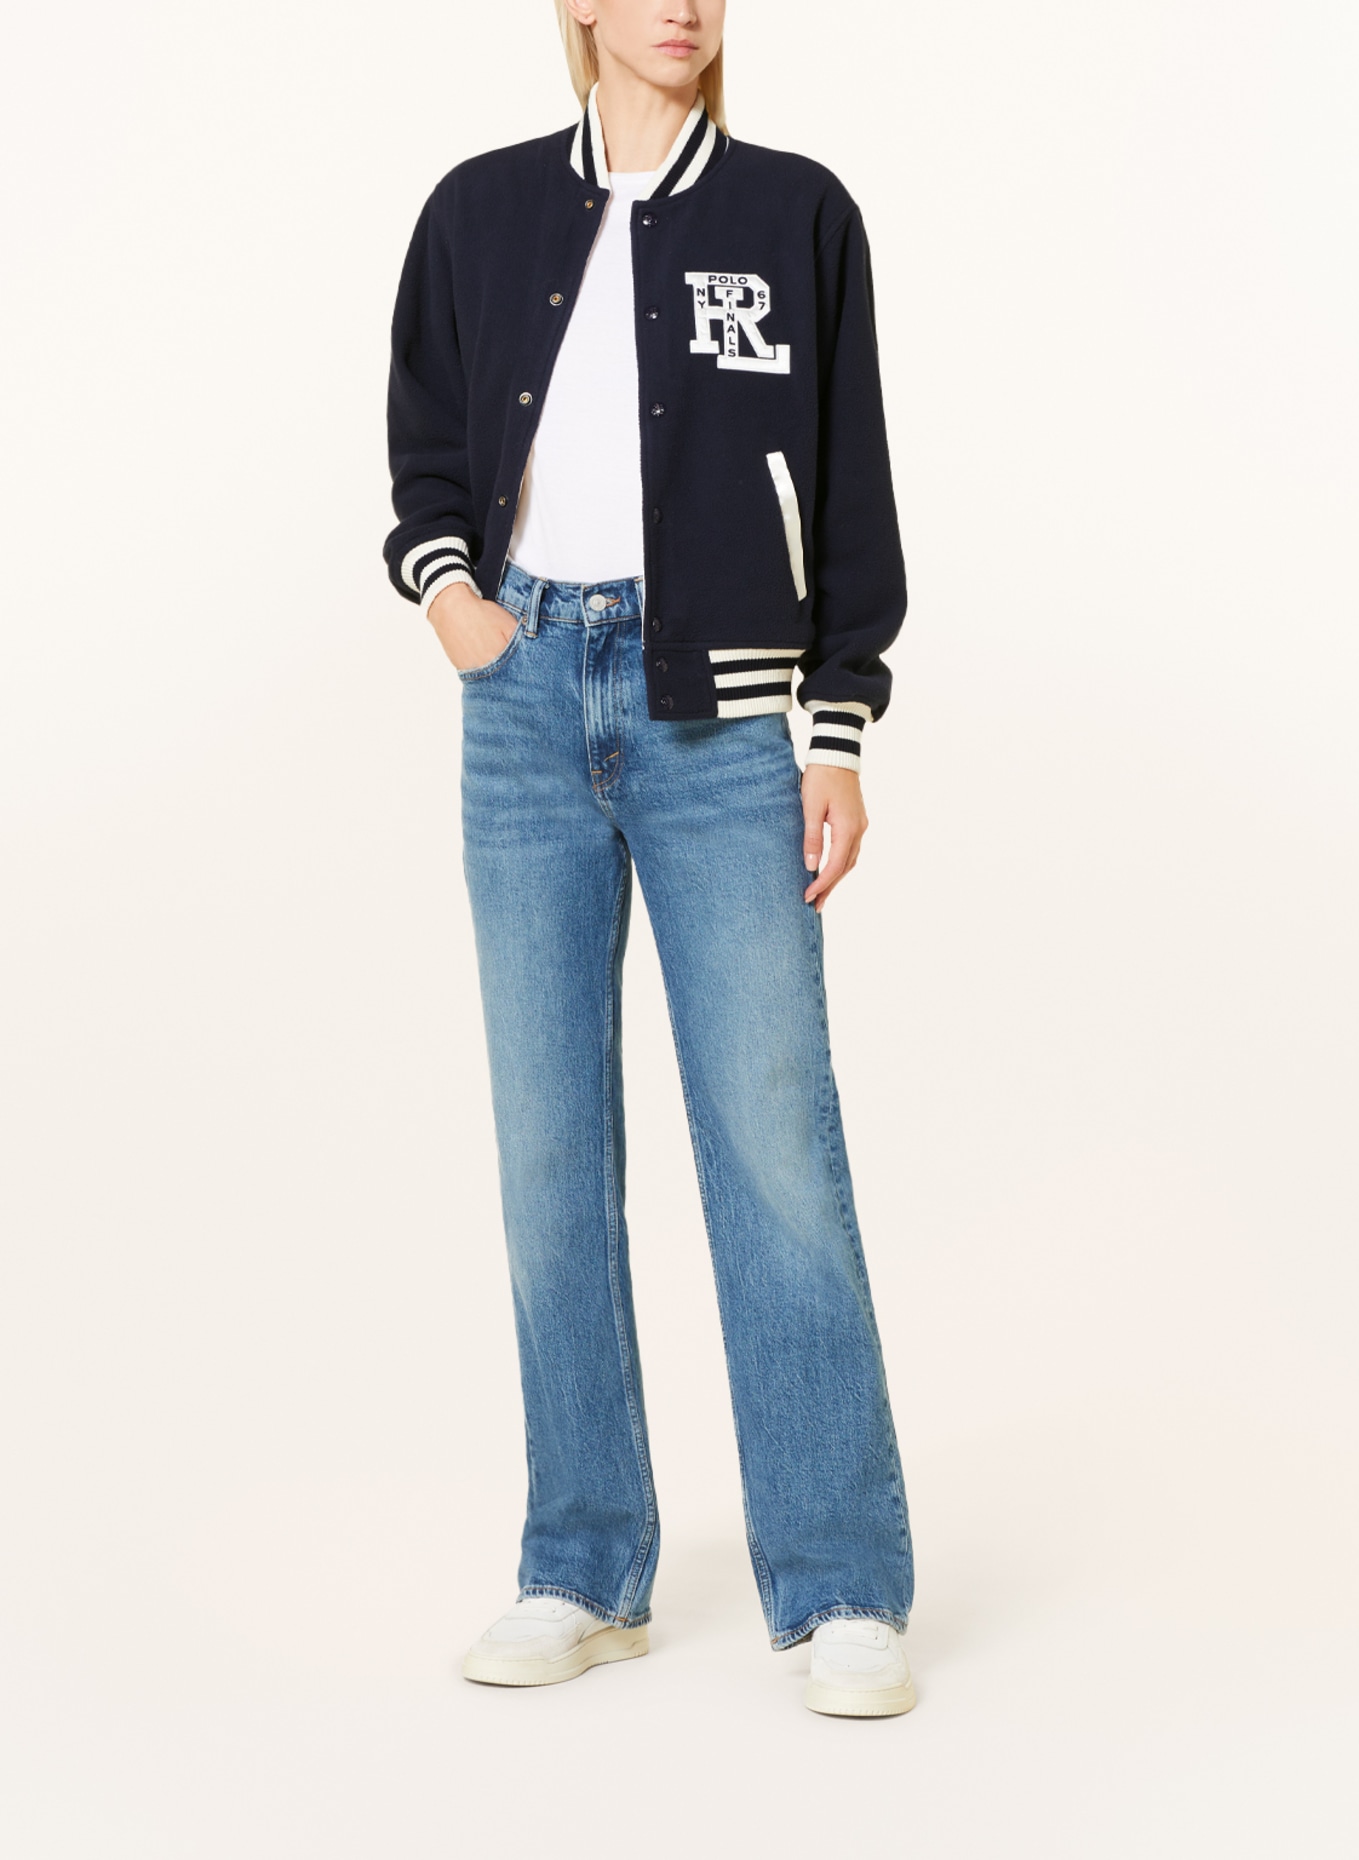 Ralph Lauren College Jacket : r/CoutureReps